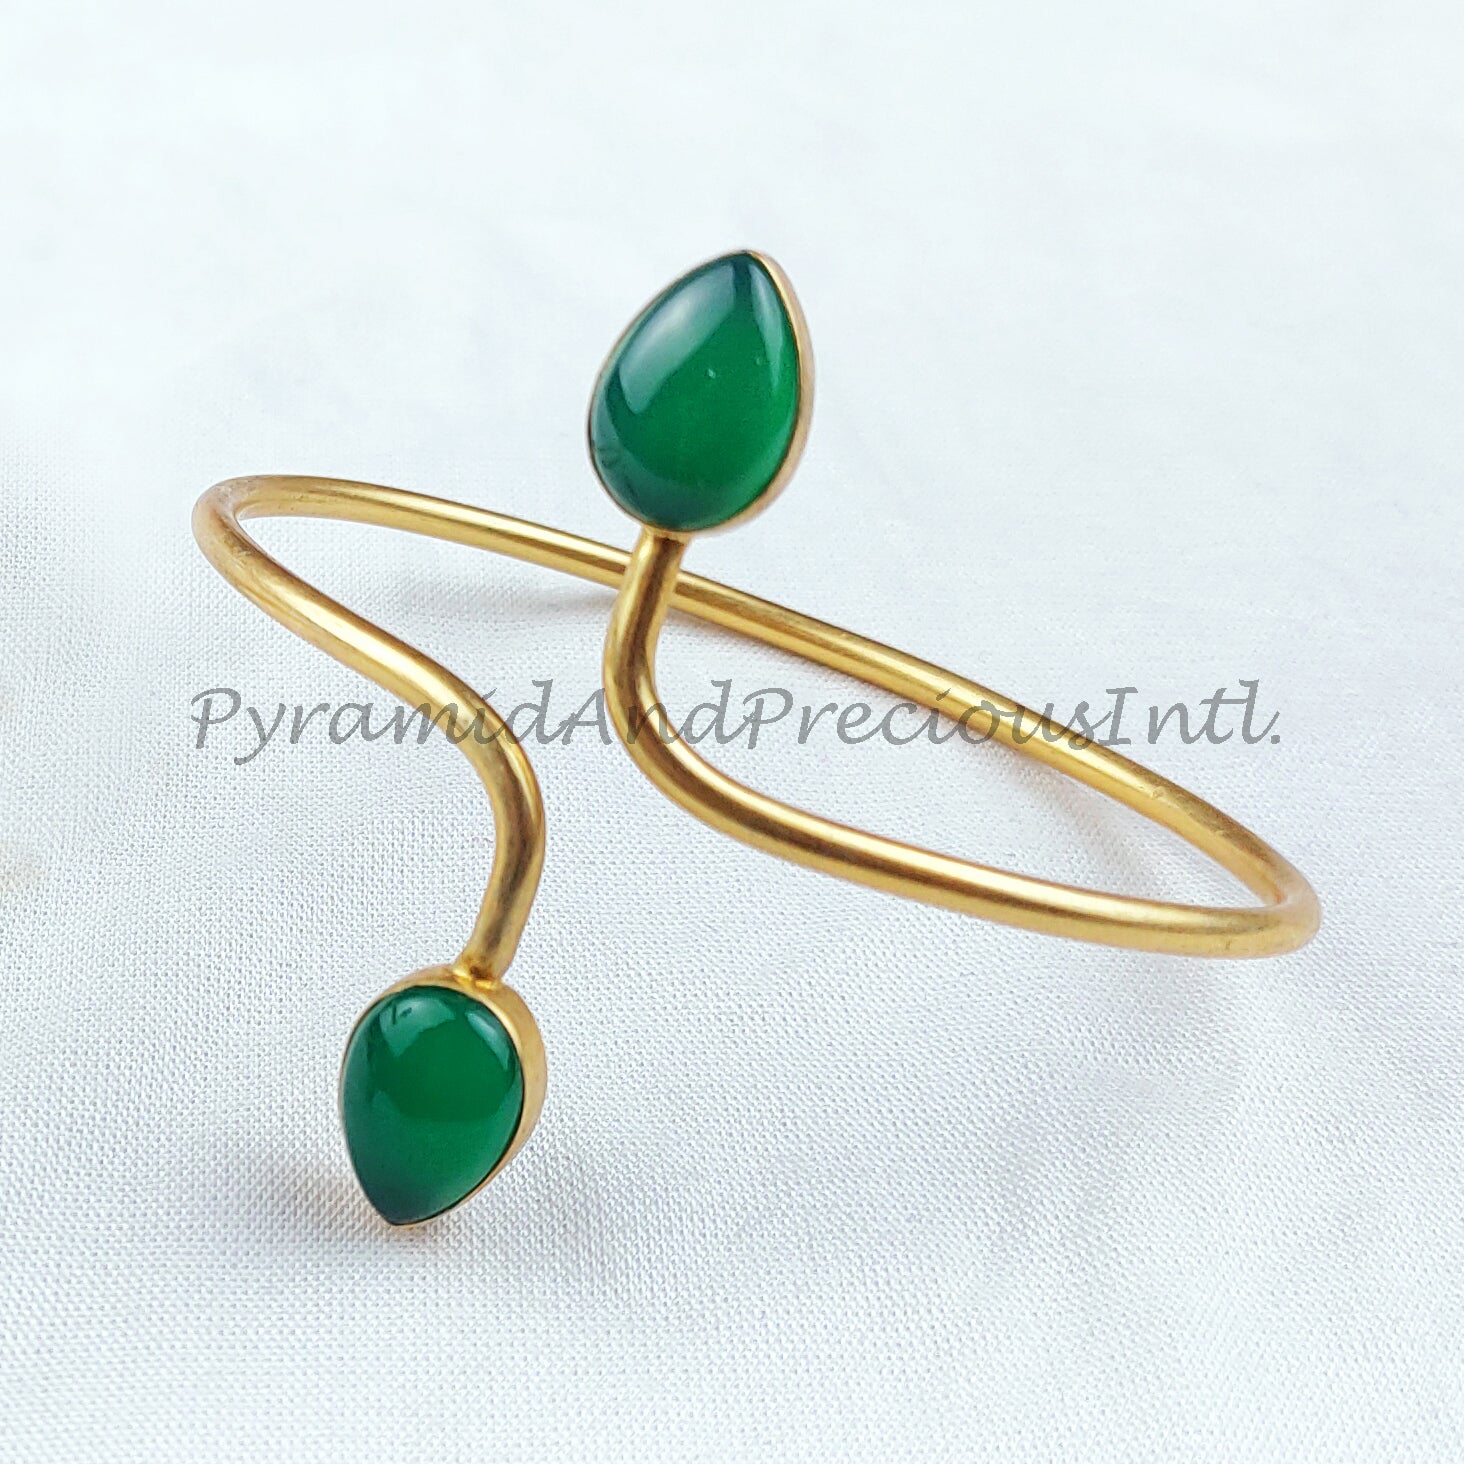 Green onyx gemstone bangle, gold plated handmade bangle, boho bangle, adjustable bangle, Green stone bangle